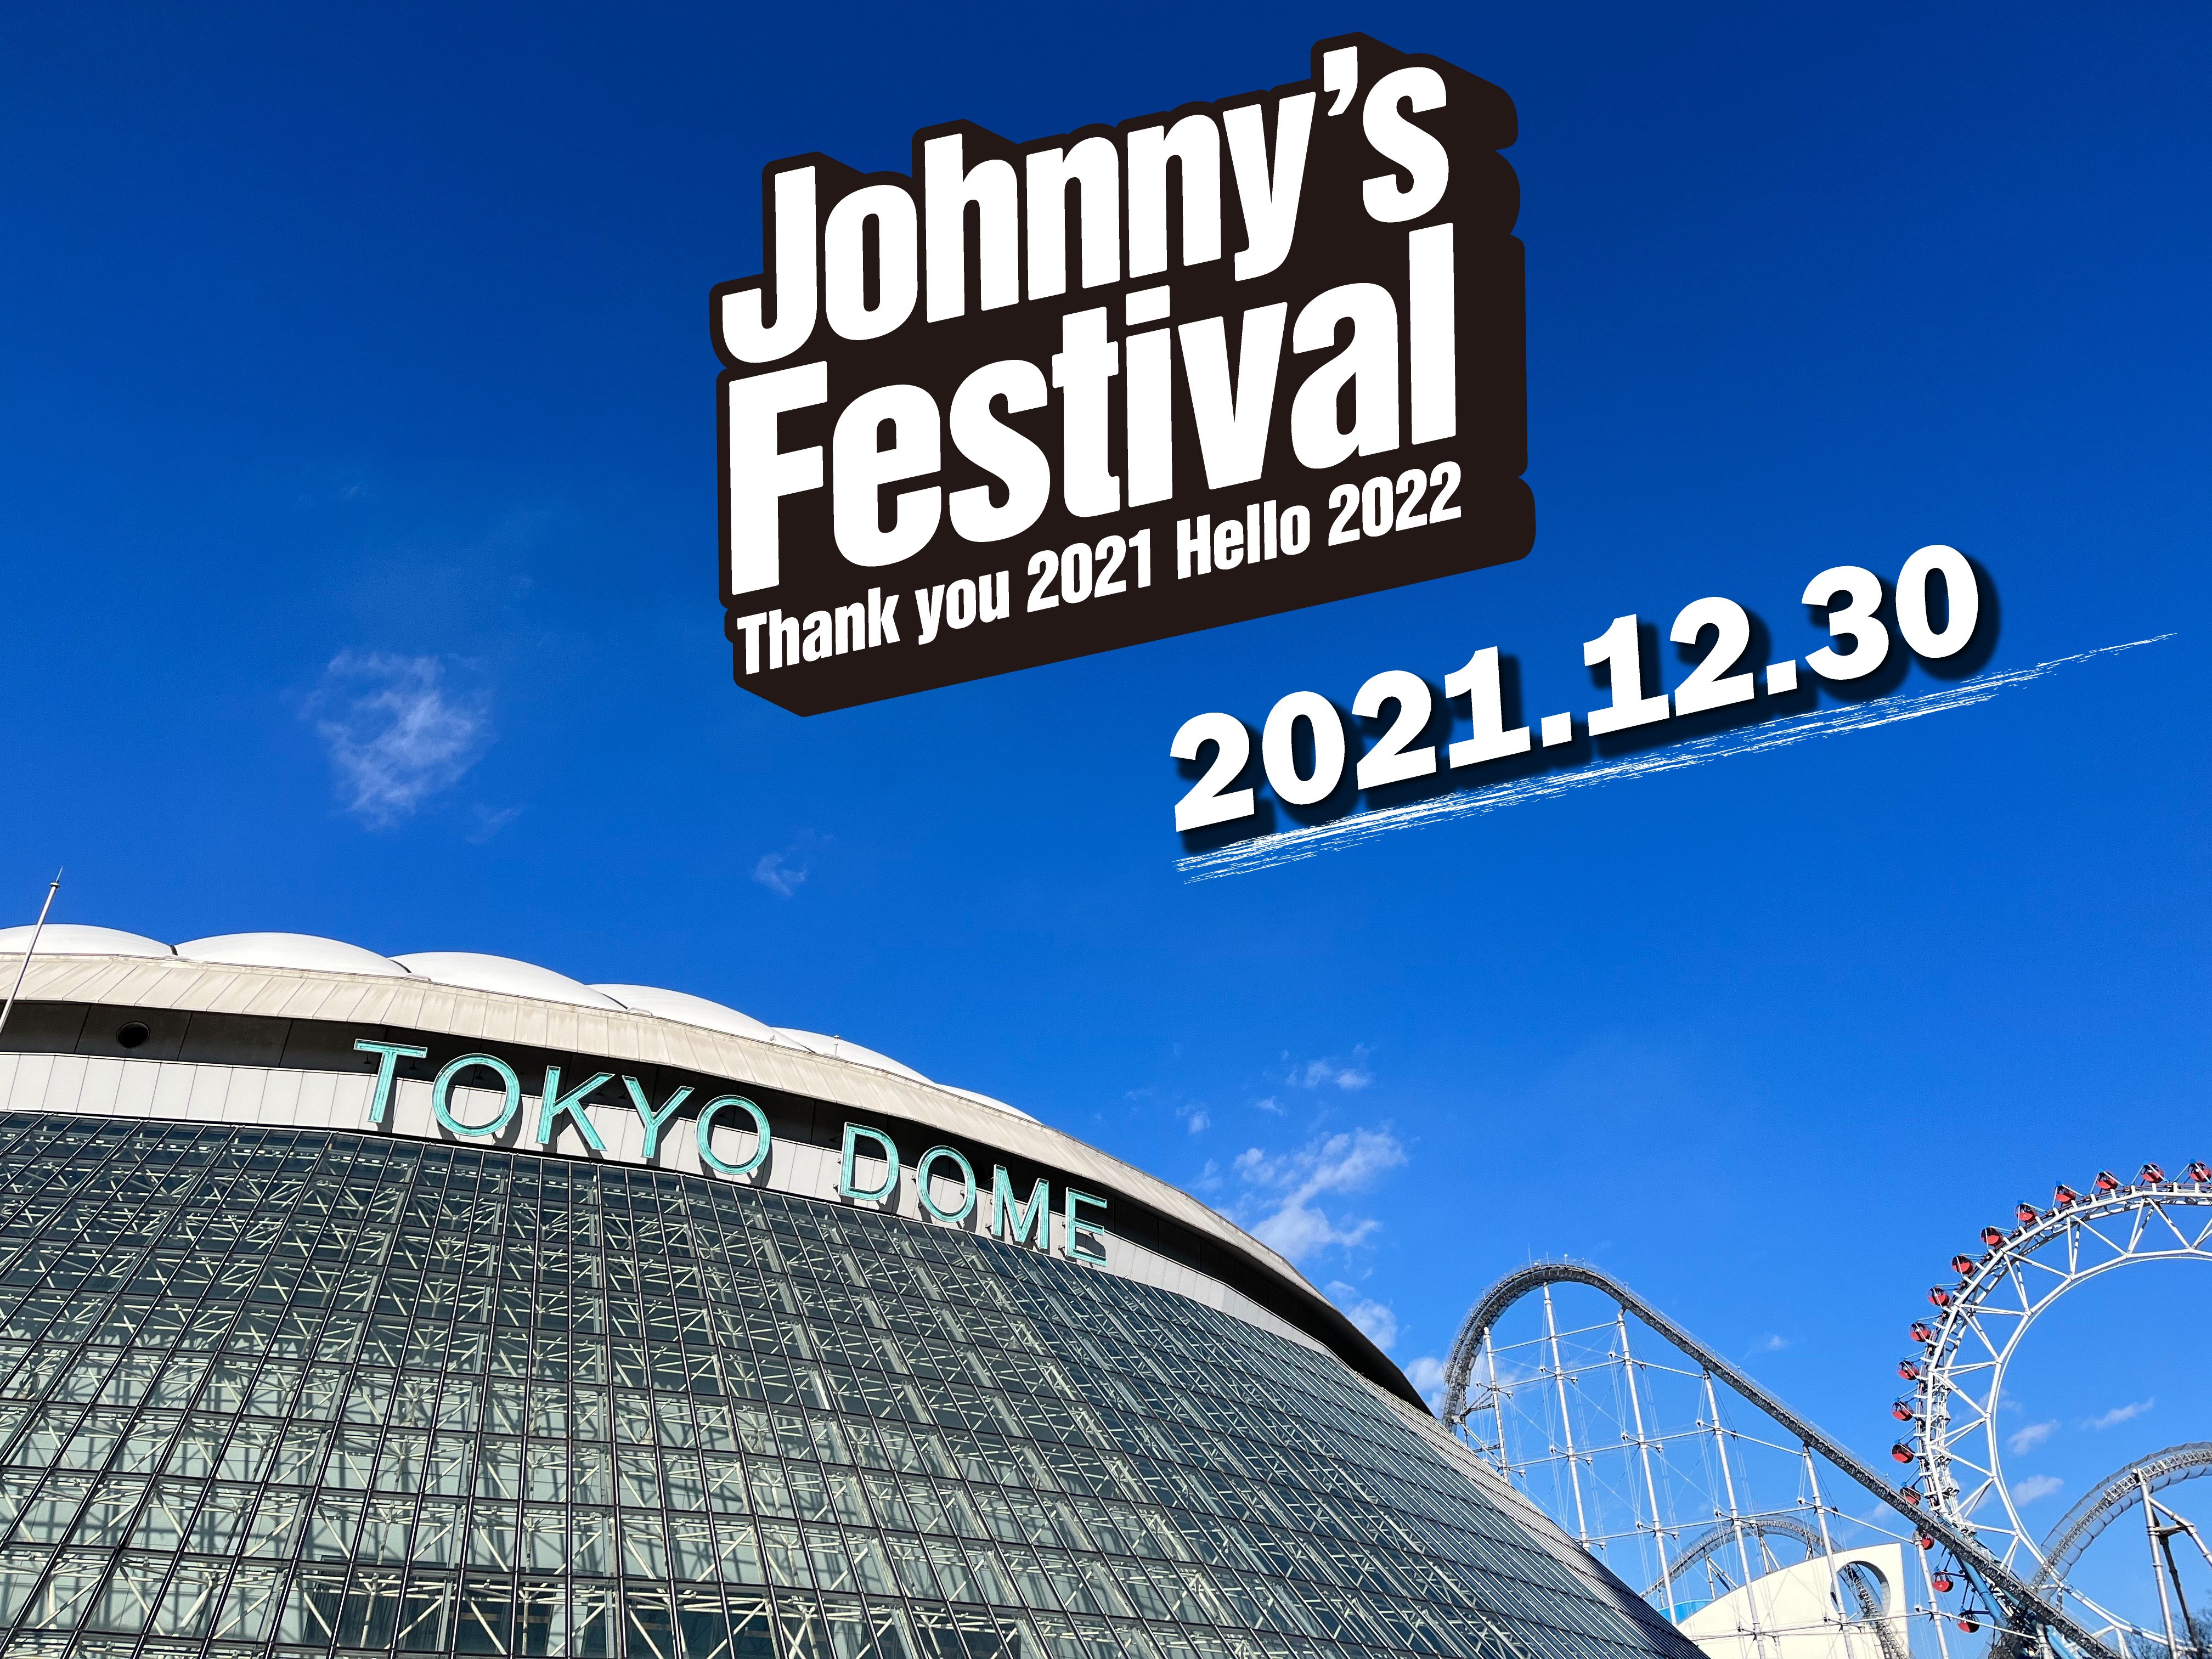 Johnny's Festival Thank you2021Hello2022